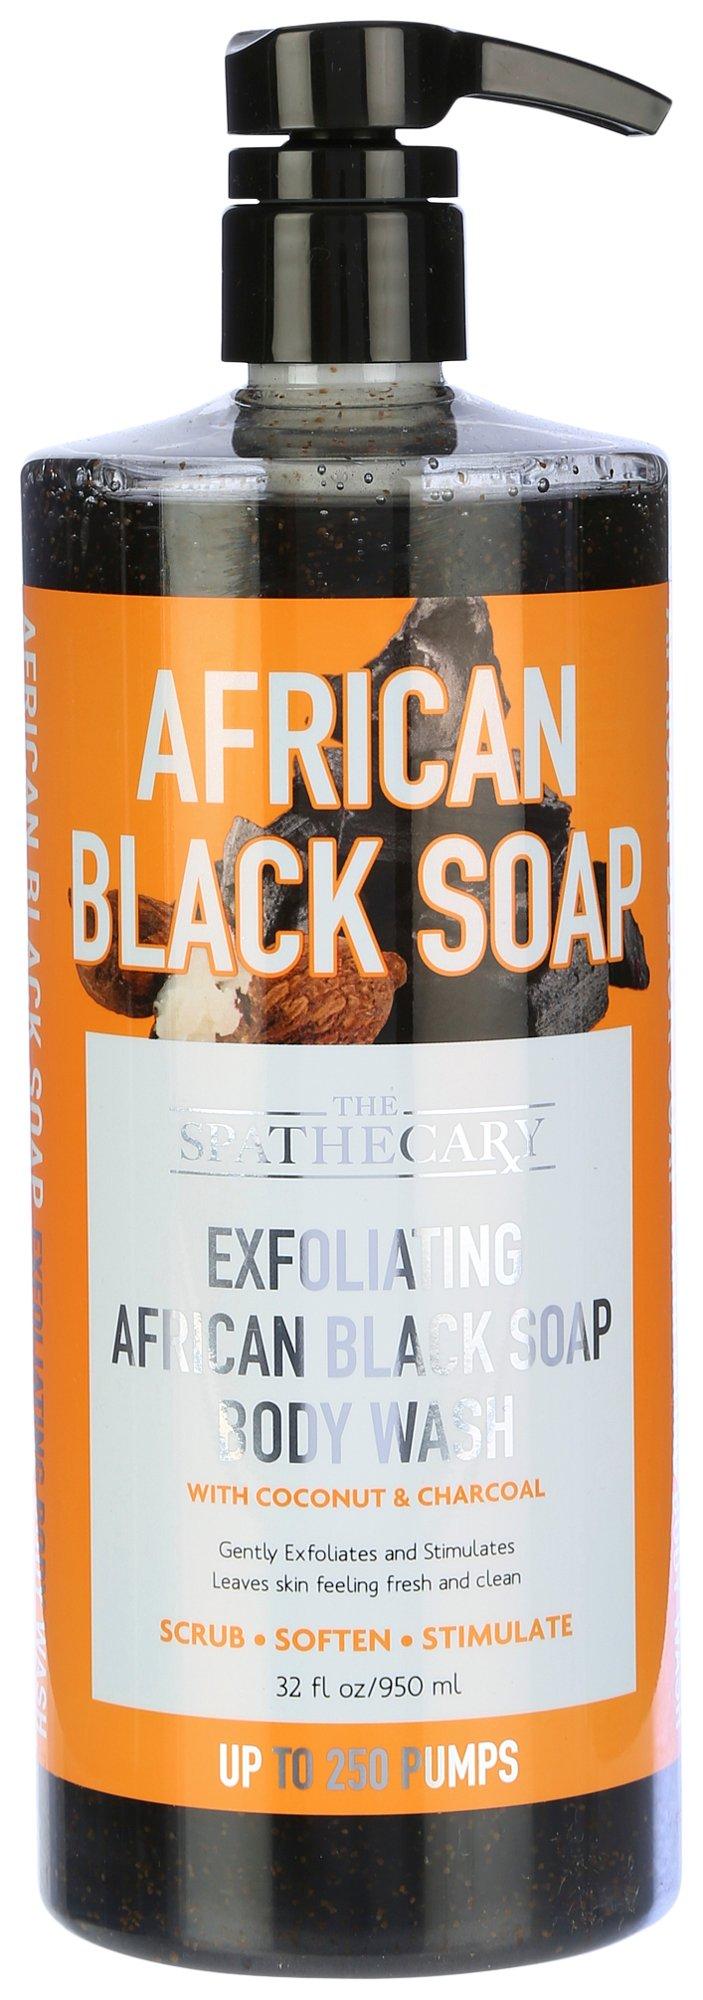 Exfoliating African Black Soap Body Wash